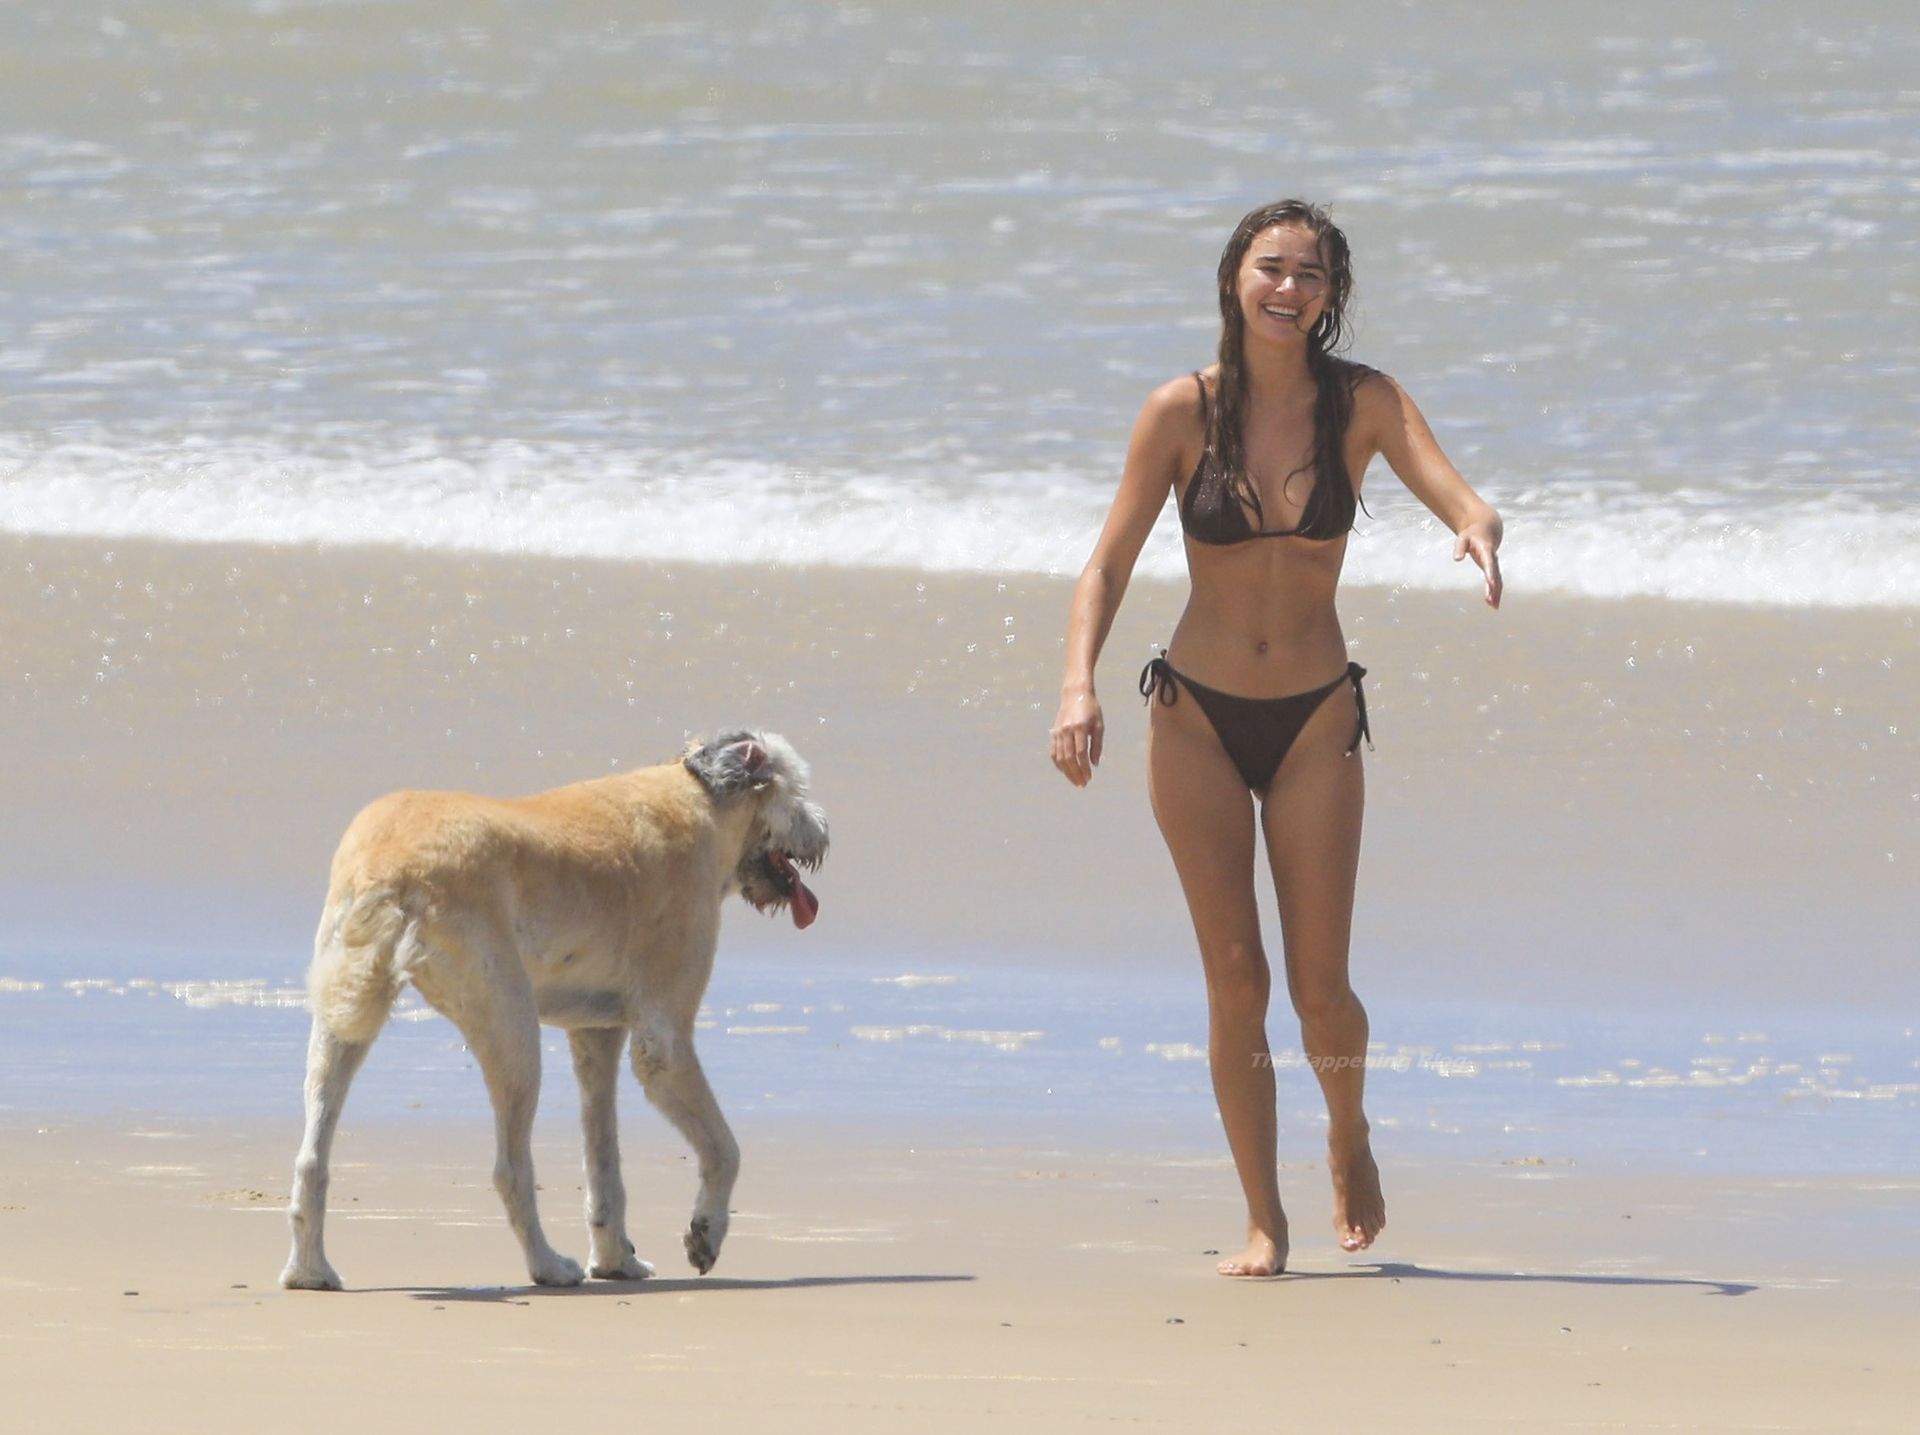 Liam Hemsworth & Gabriella Brooks Head to the Beach with Their Dogs (59 Photos)